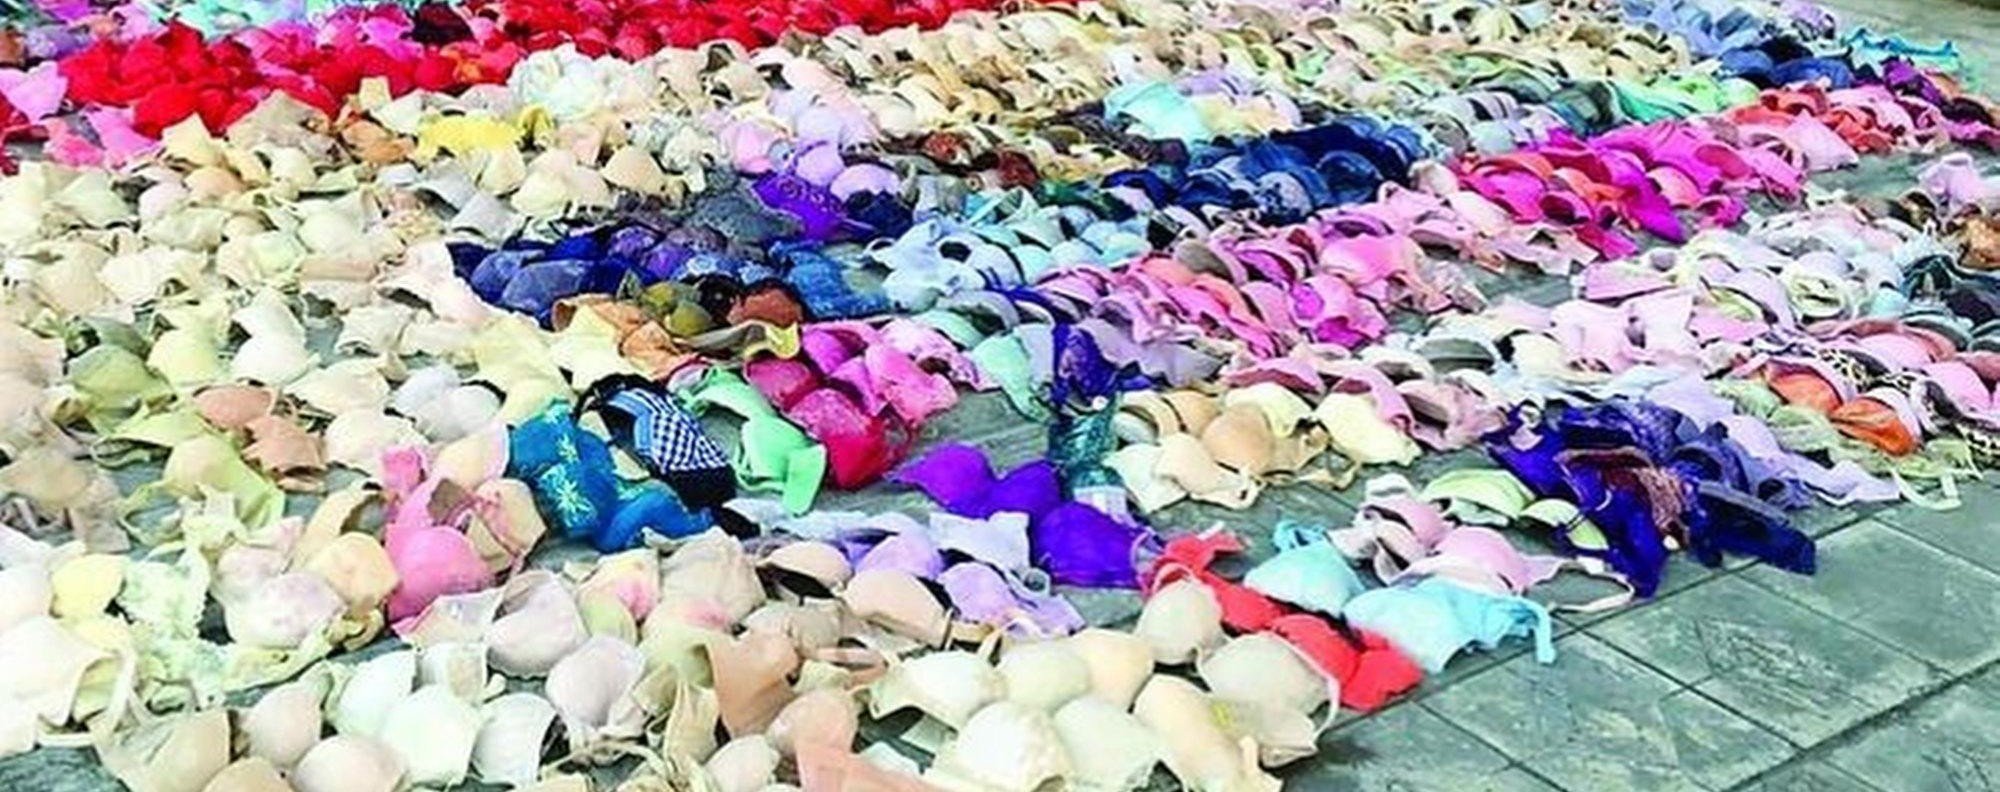 Underwear thief exposed in Cauayan City, Isabela